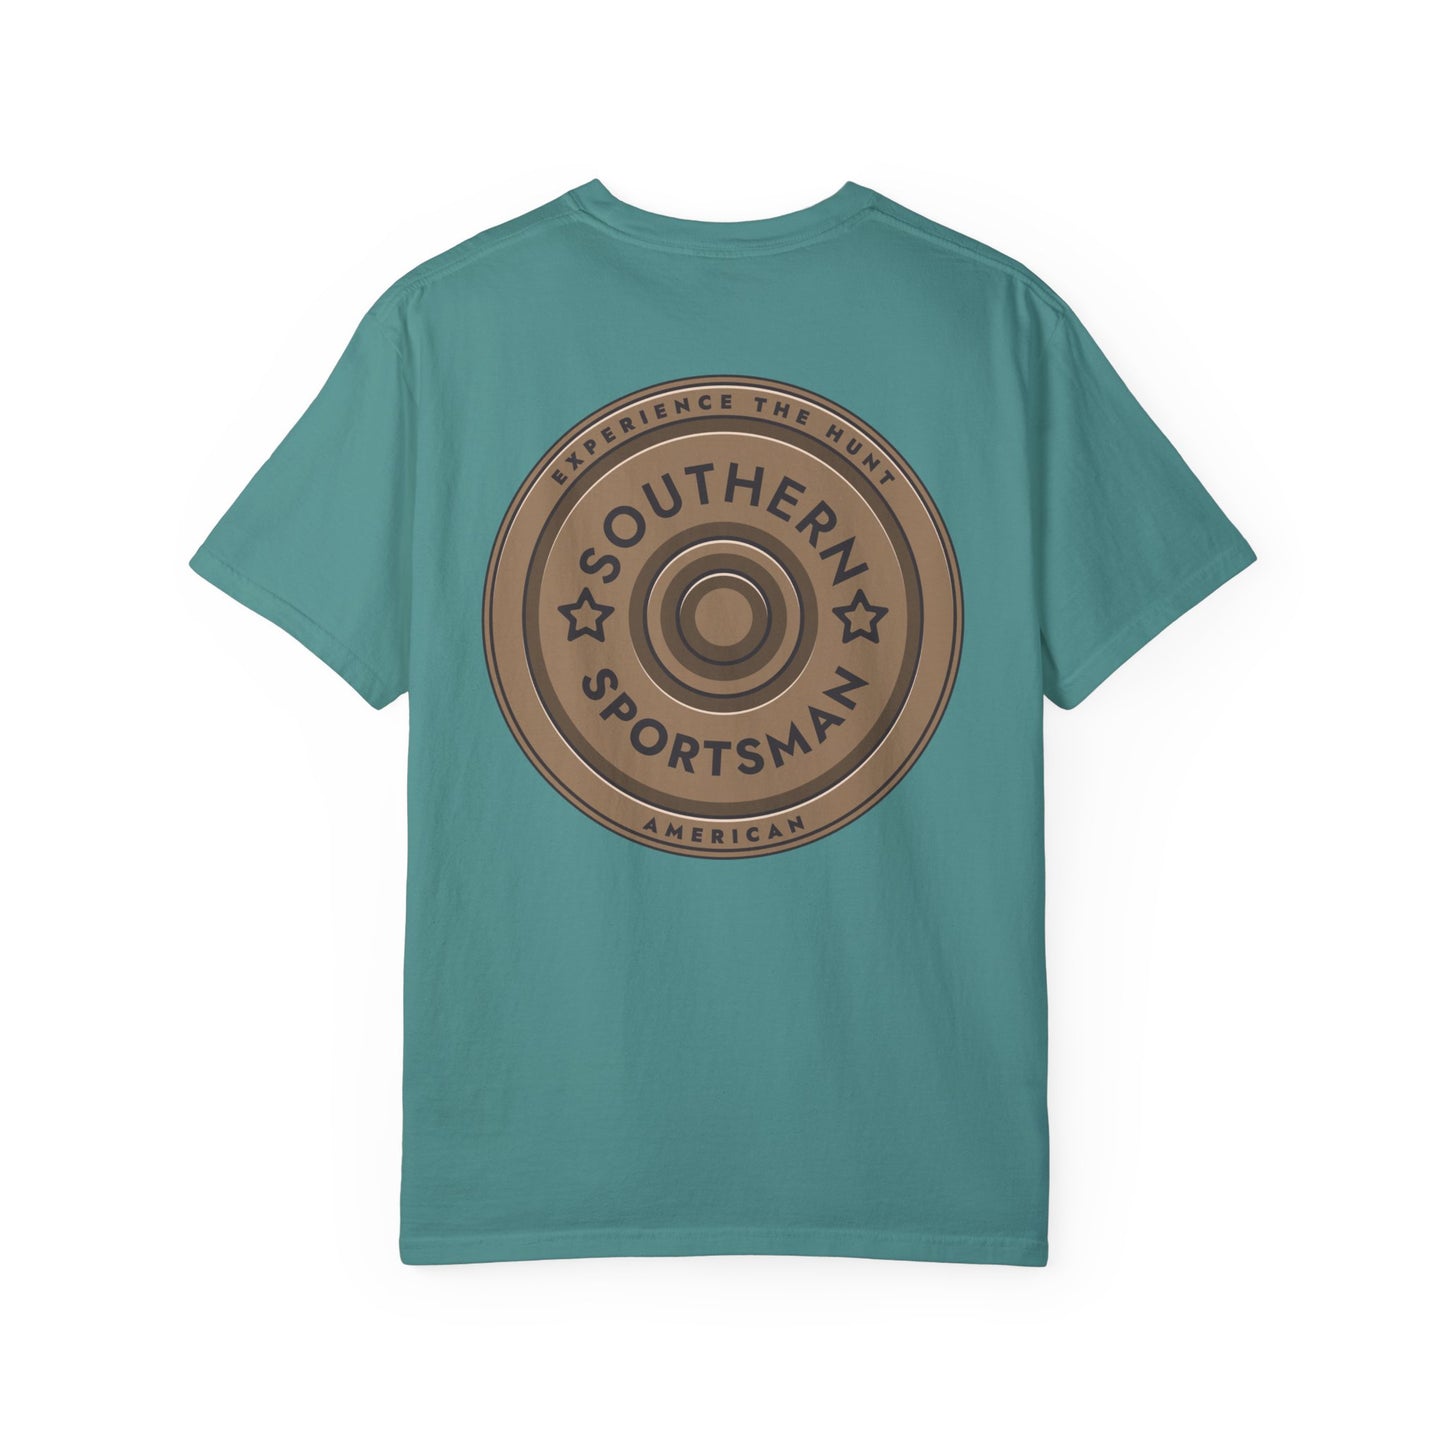 Shotgun Shell Comfort Colors T-shirt